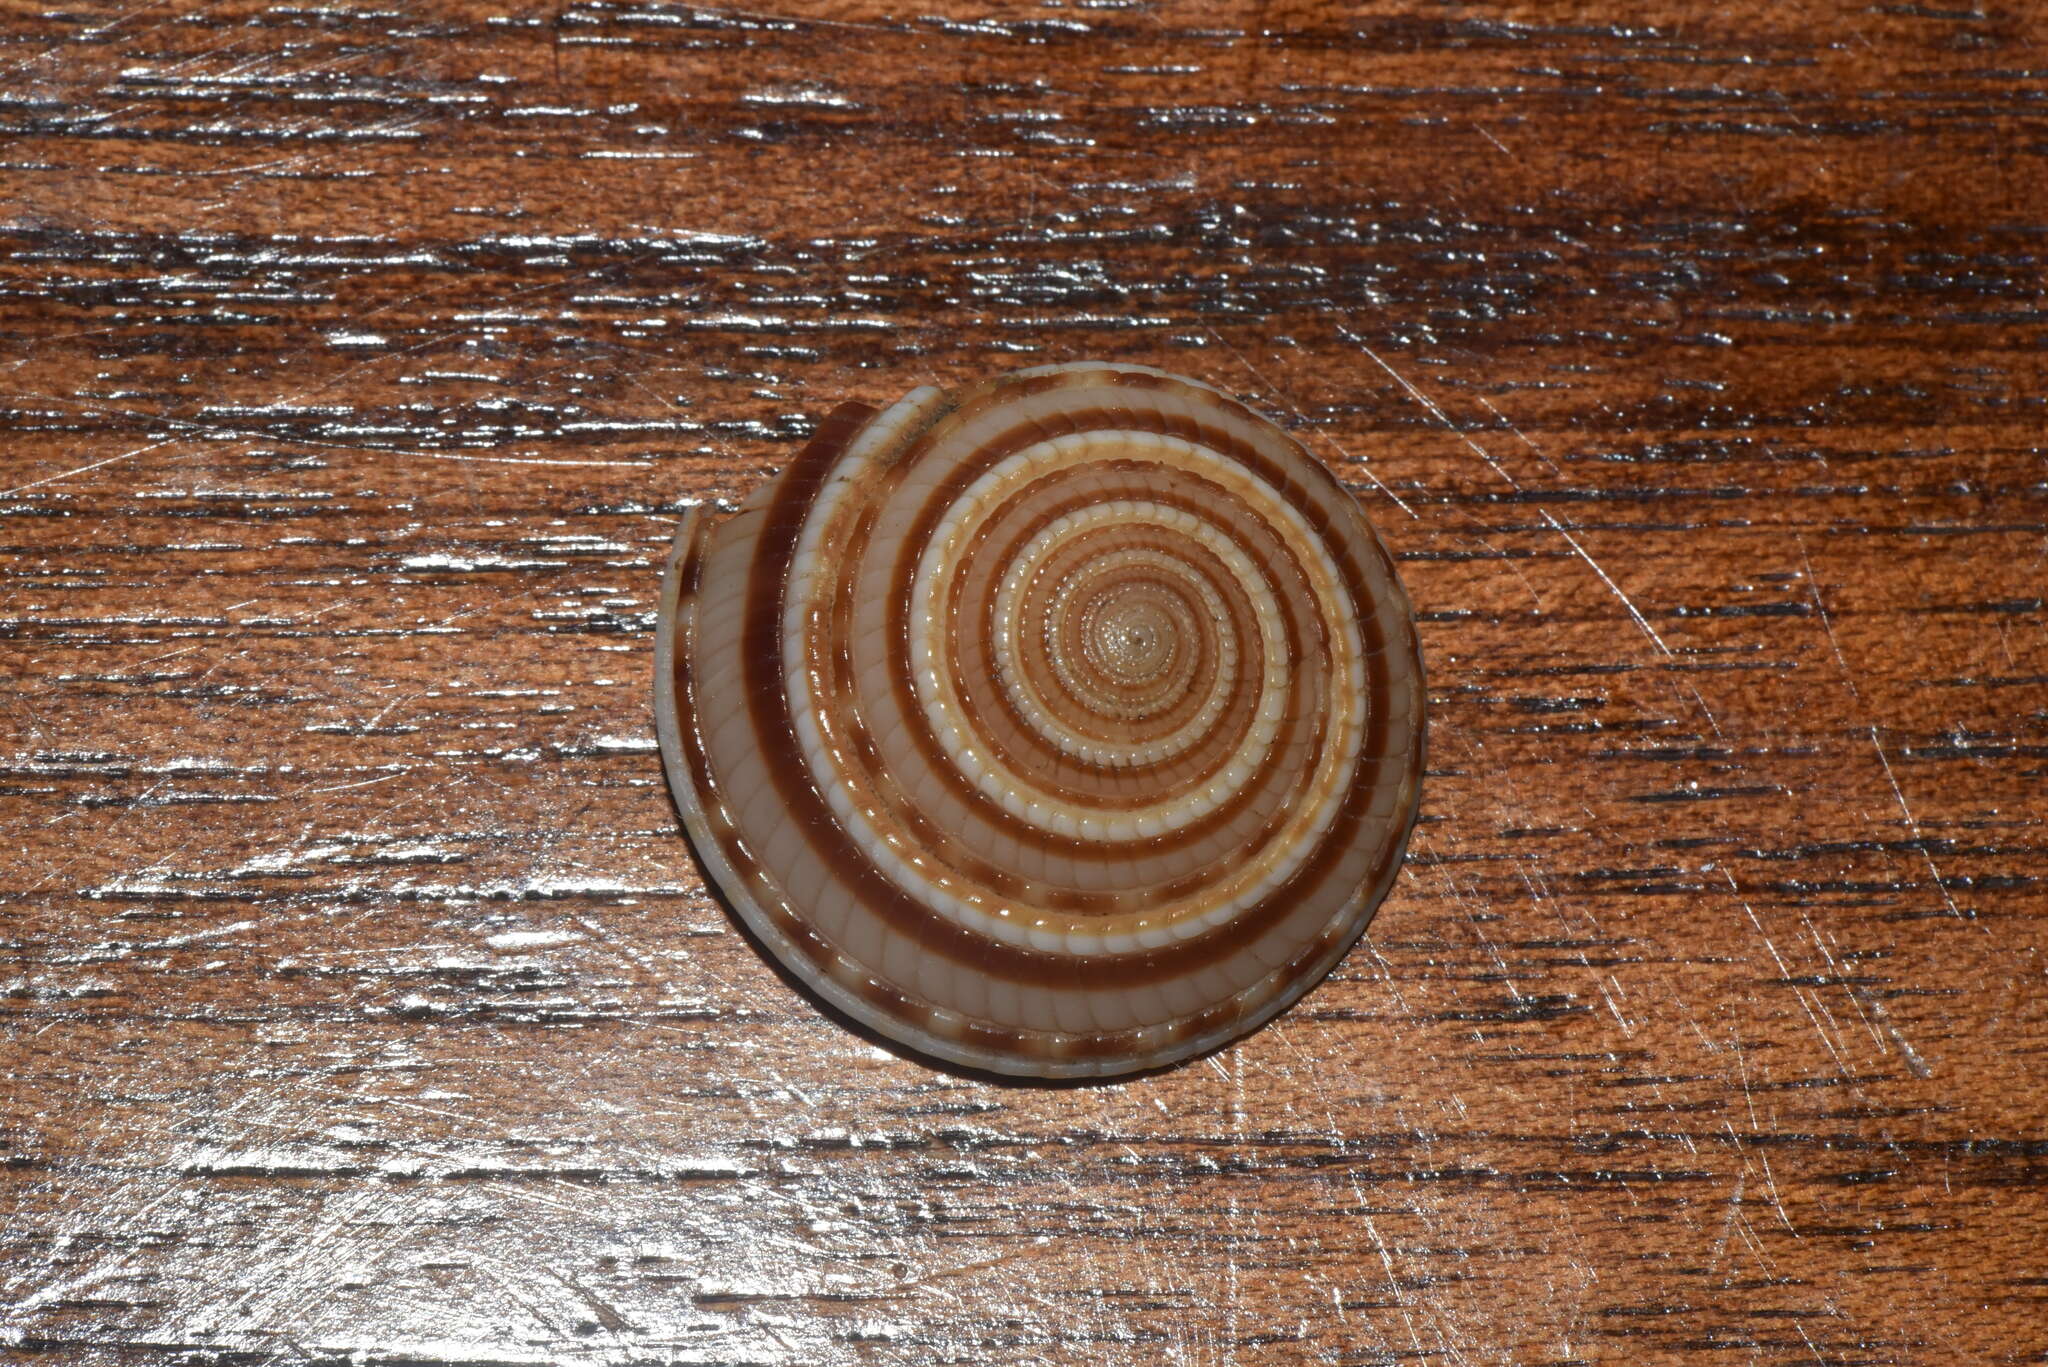 Image of European sundial snail